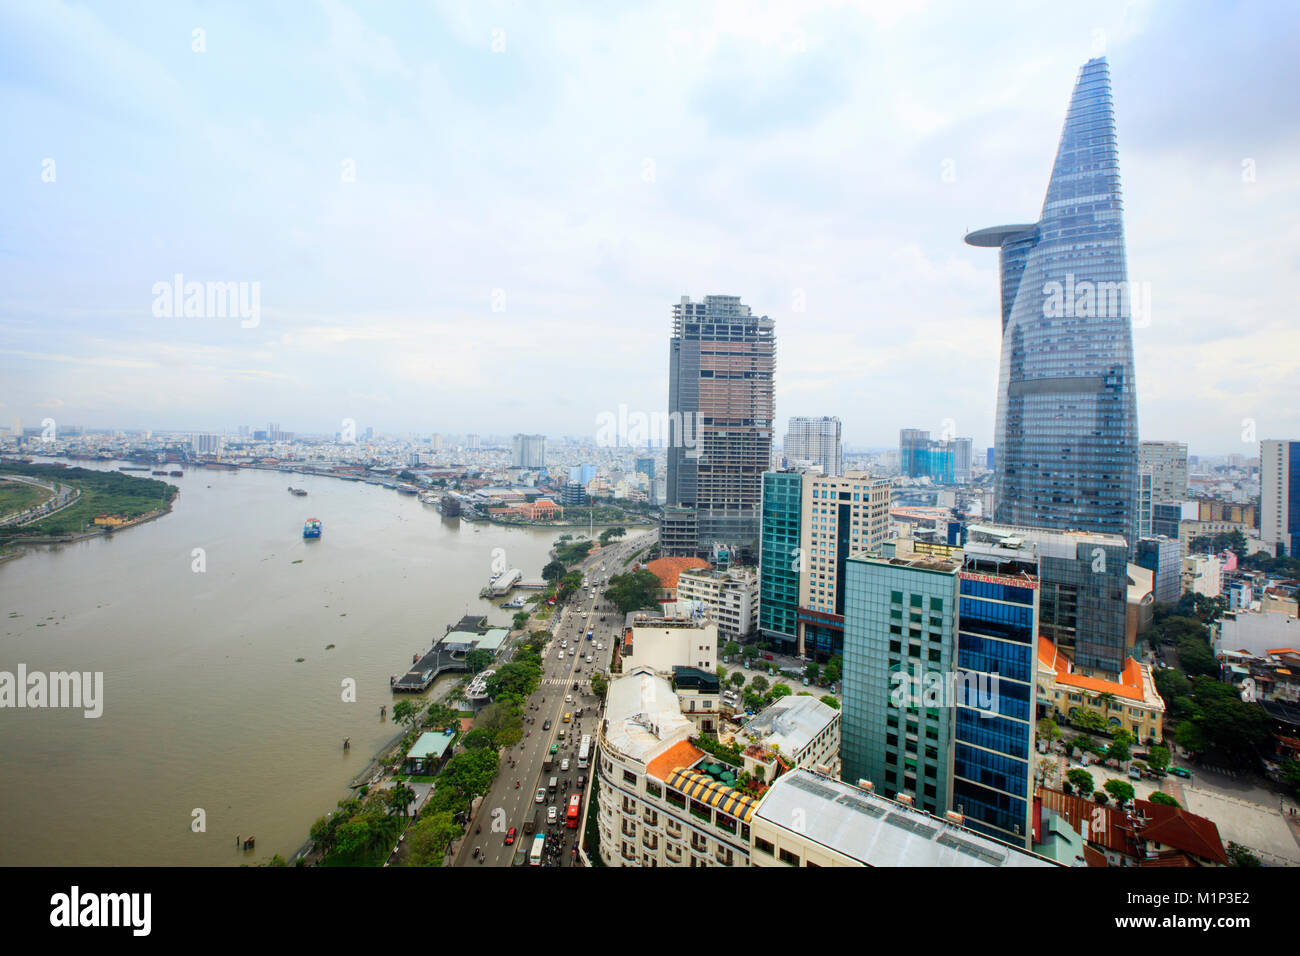 The skyline of Ho Chi Minh City (Saigon) showing the Bitexco tower and the Saigon River, Hoi Chi Minh City, Vietnam, Indochina, Southeast Asia, Asia Stock Photo